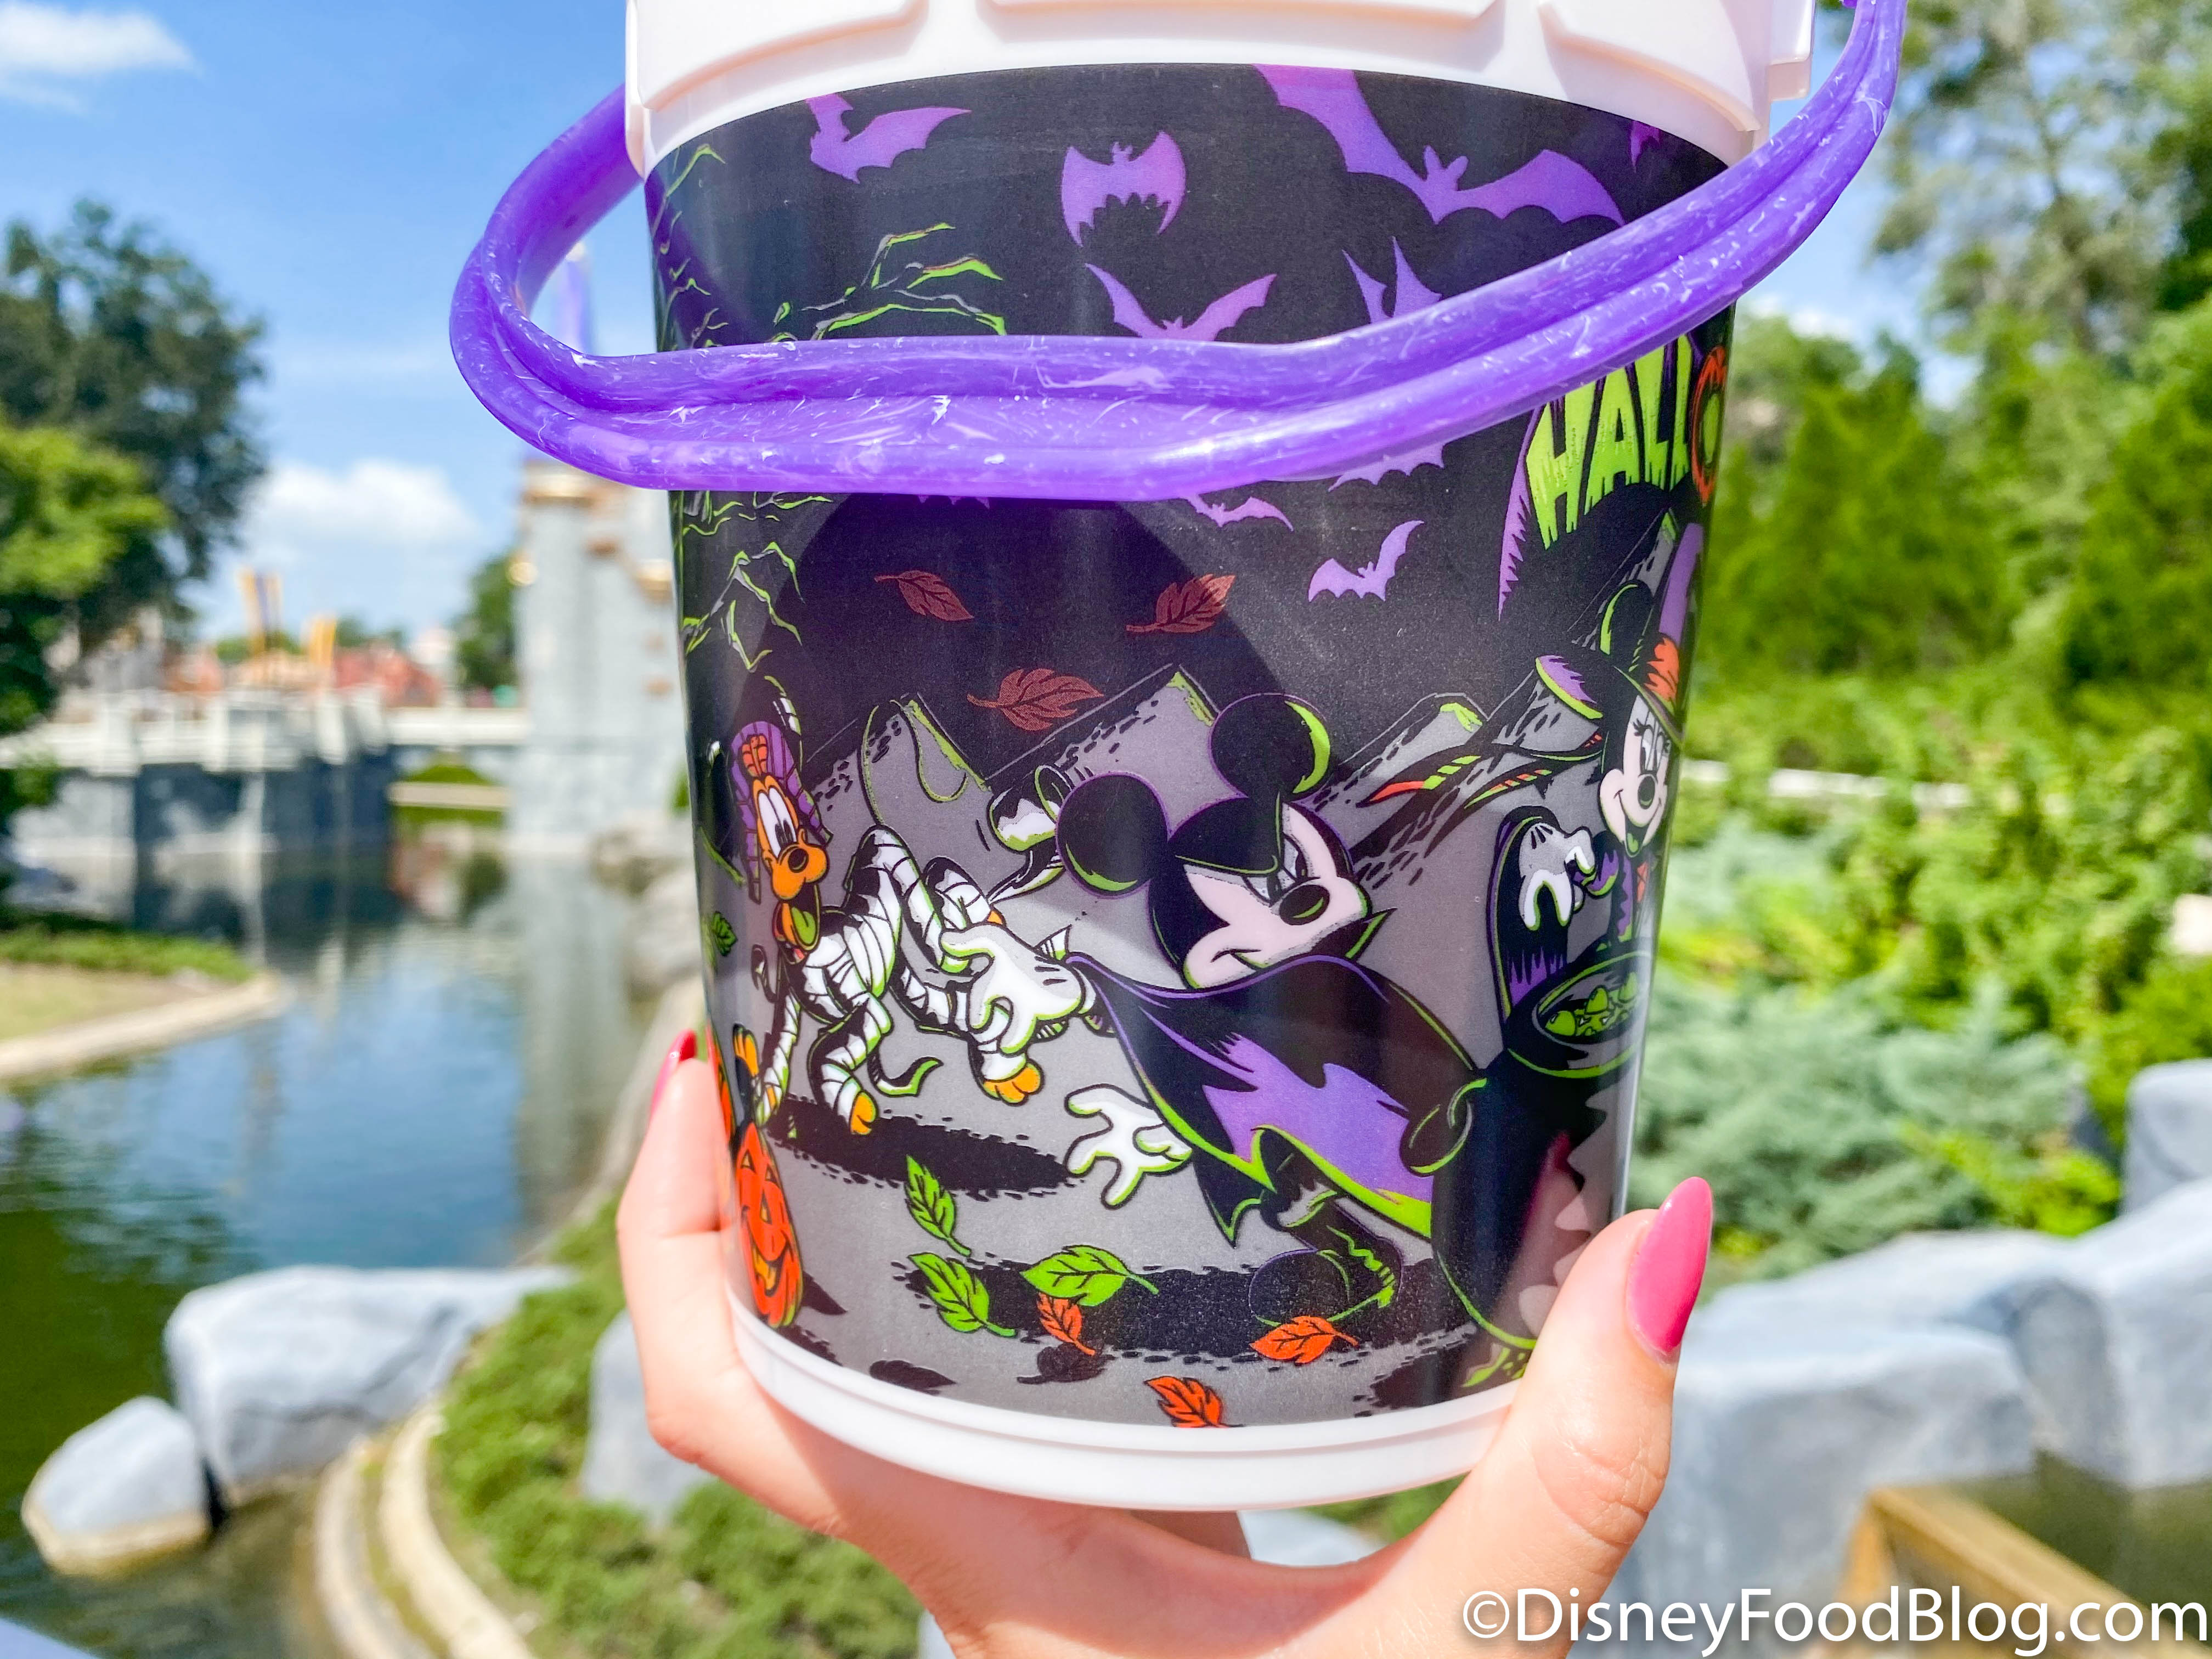 Yay! We Found ANOTHER Halloween Popcorn Bucket in Disney World